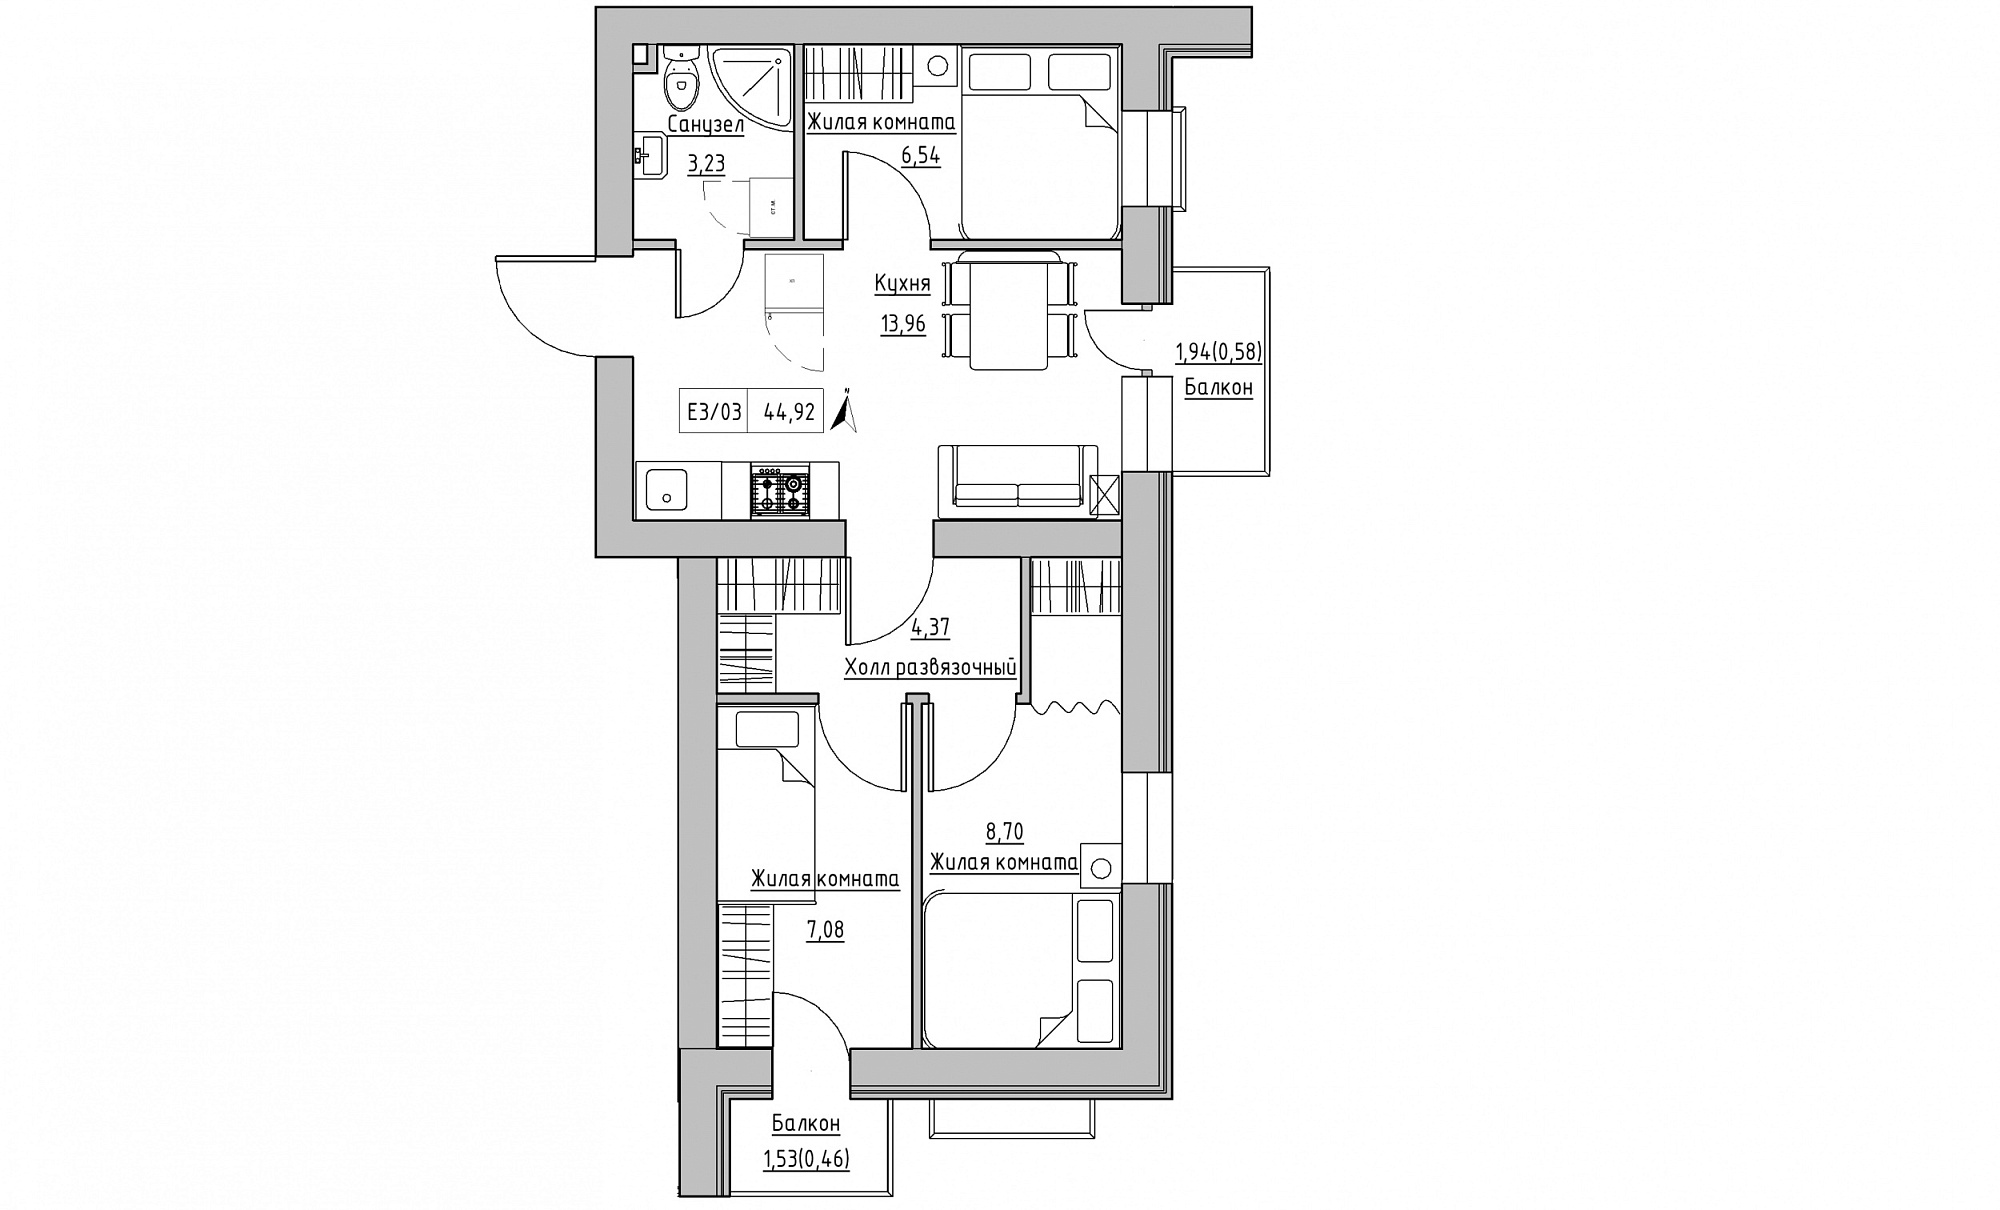 Planning 3-rm flats area 44.92m2, KS-015-05/0008.